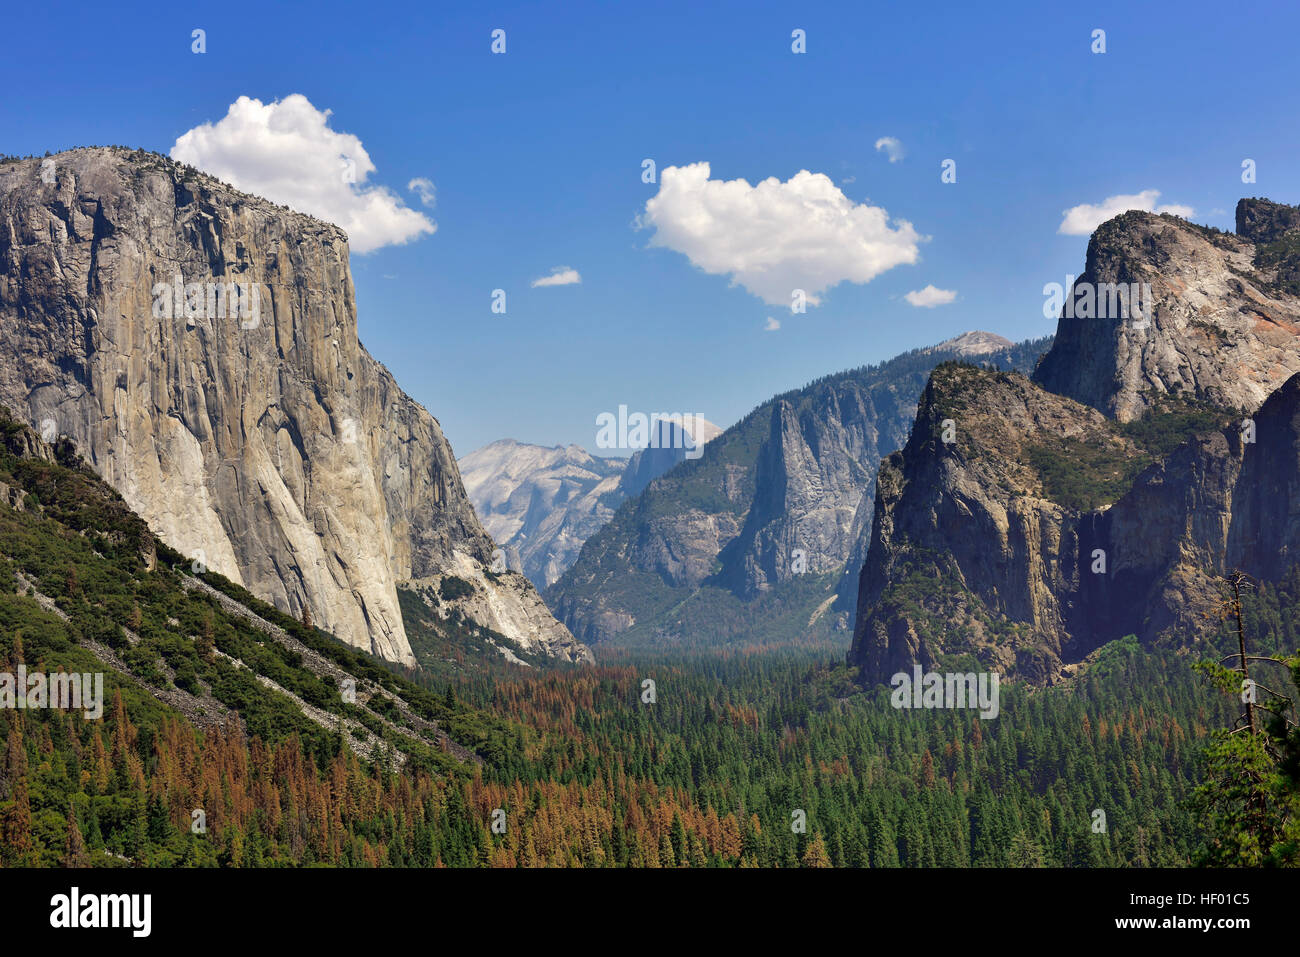 View of the Yosemite Valley, granite cliffs, El Capitan, Half Dome, mountains, Yosemite National Park, California, USA Stock Photo